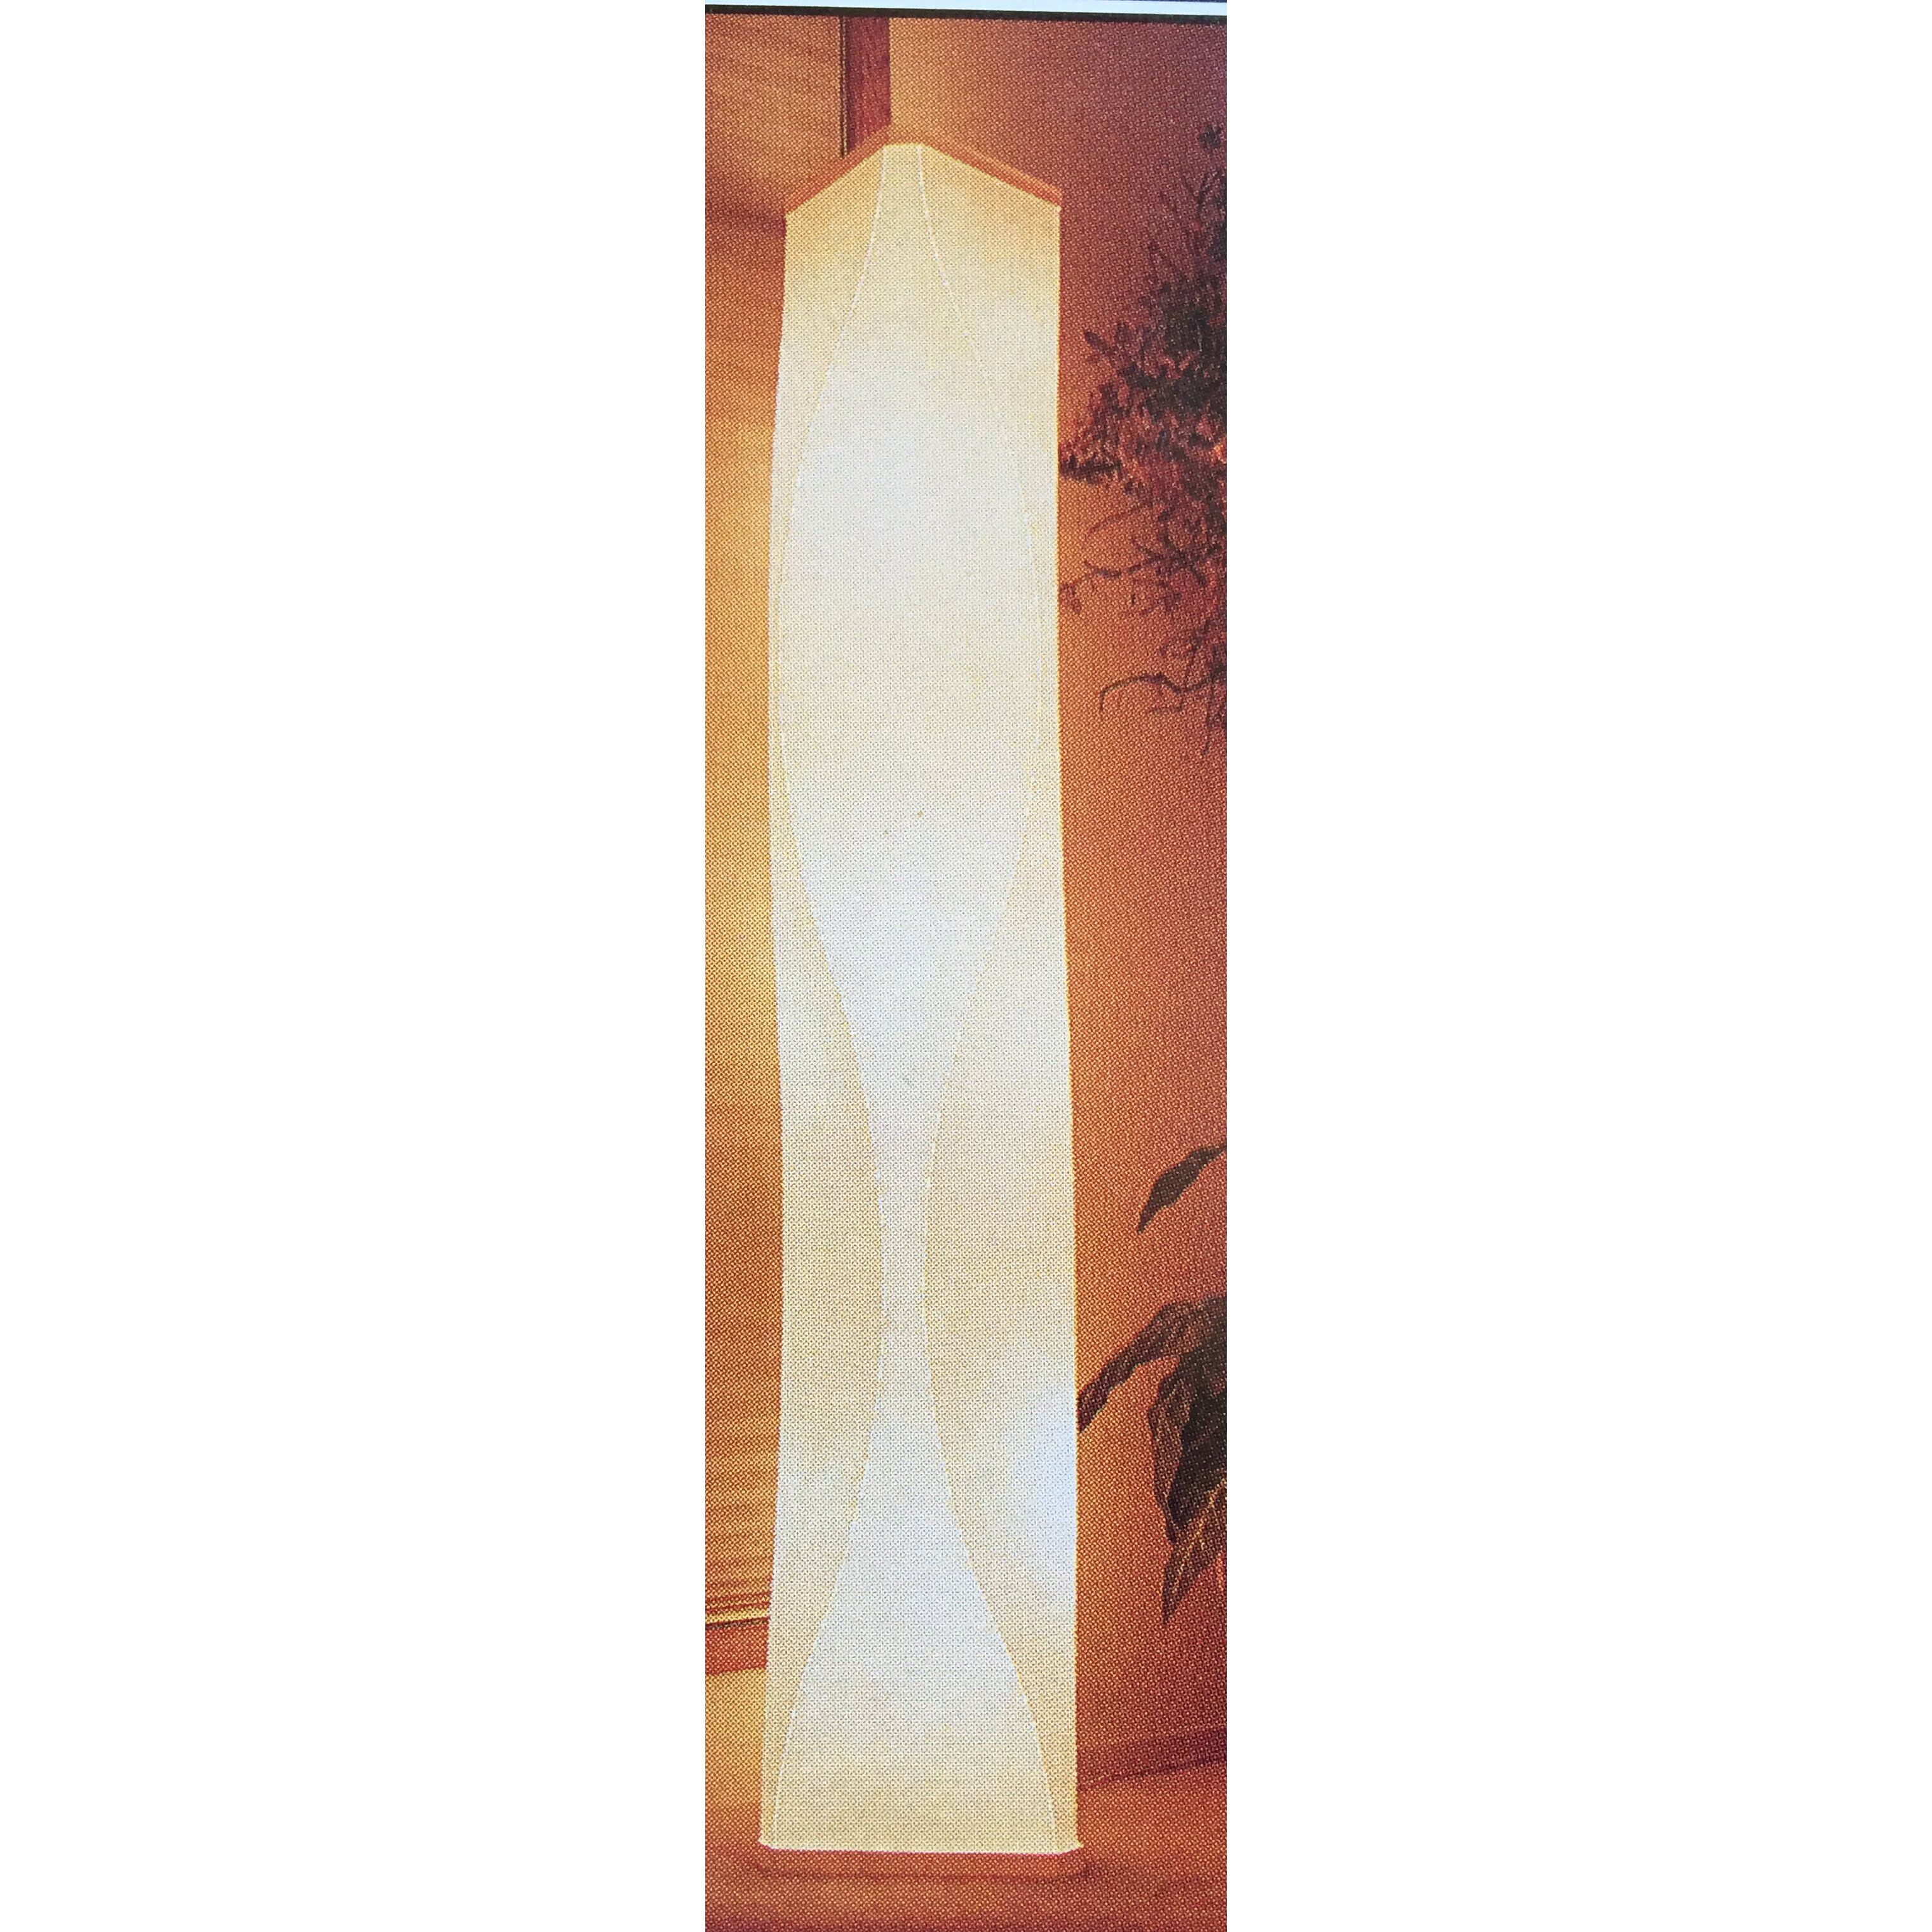 Roland Simmons Lumalight 76 Floor Lamp Wayfair Lamps Arc regarding size 3041 X 3041